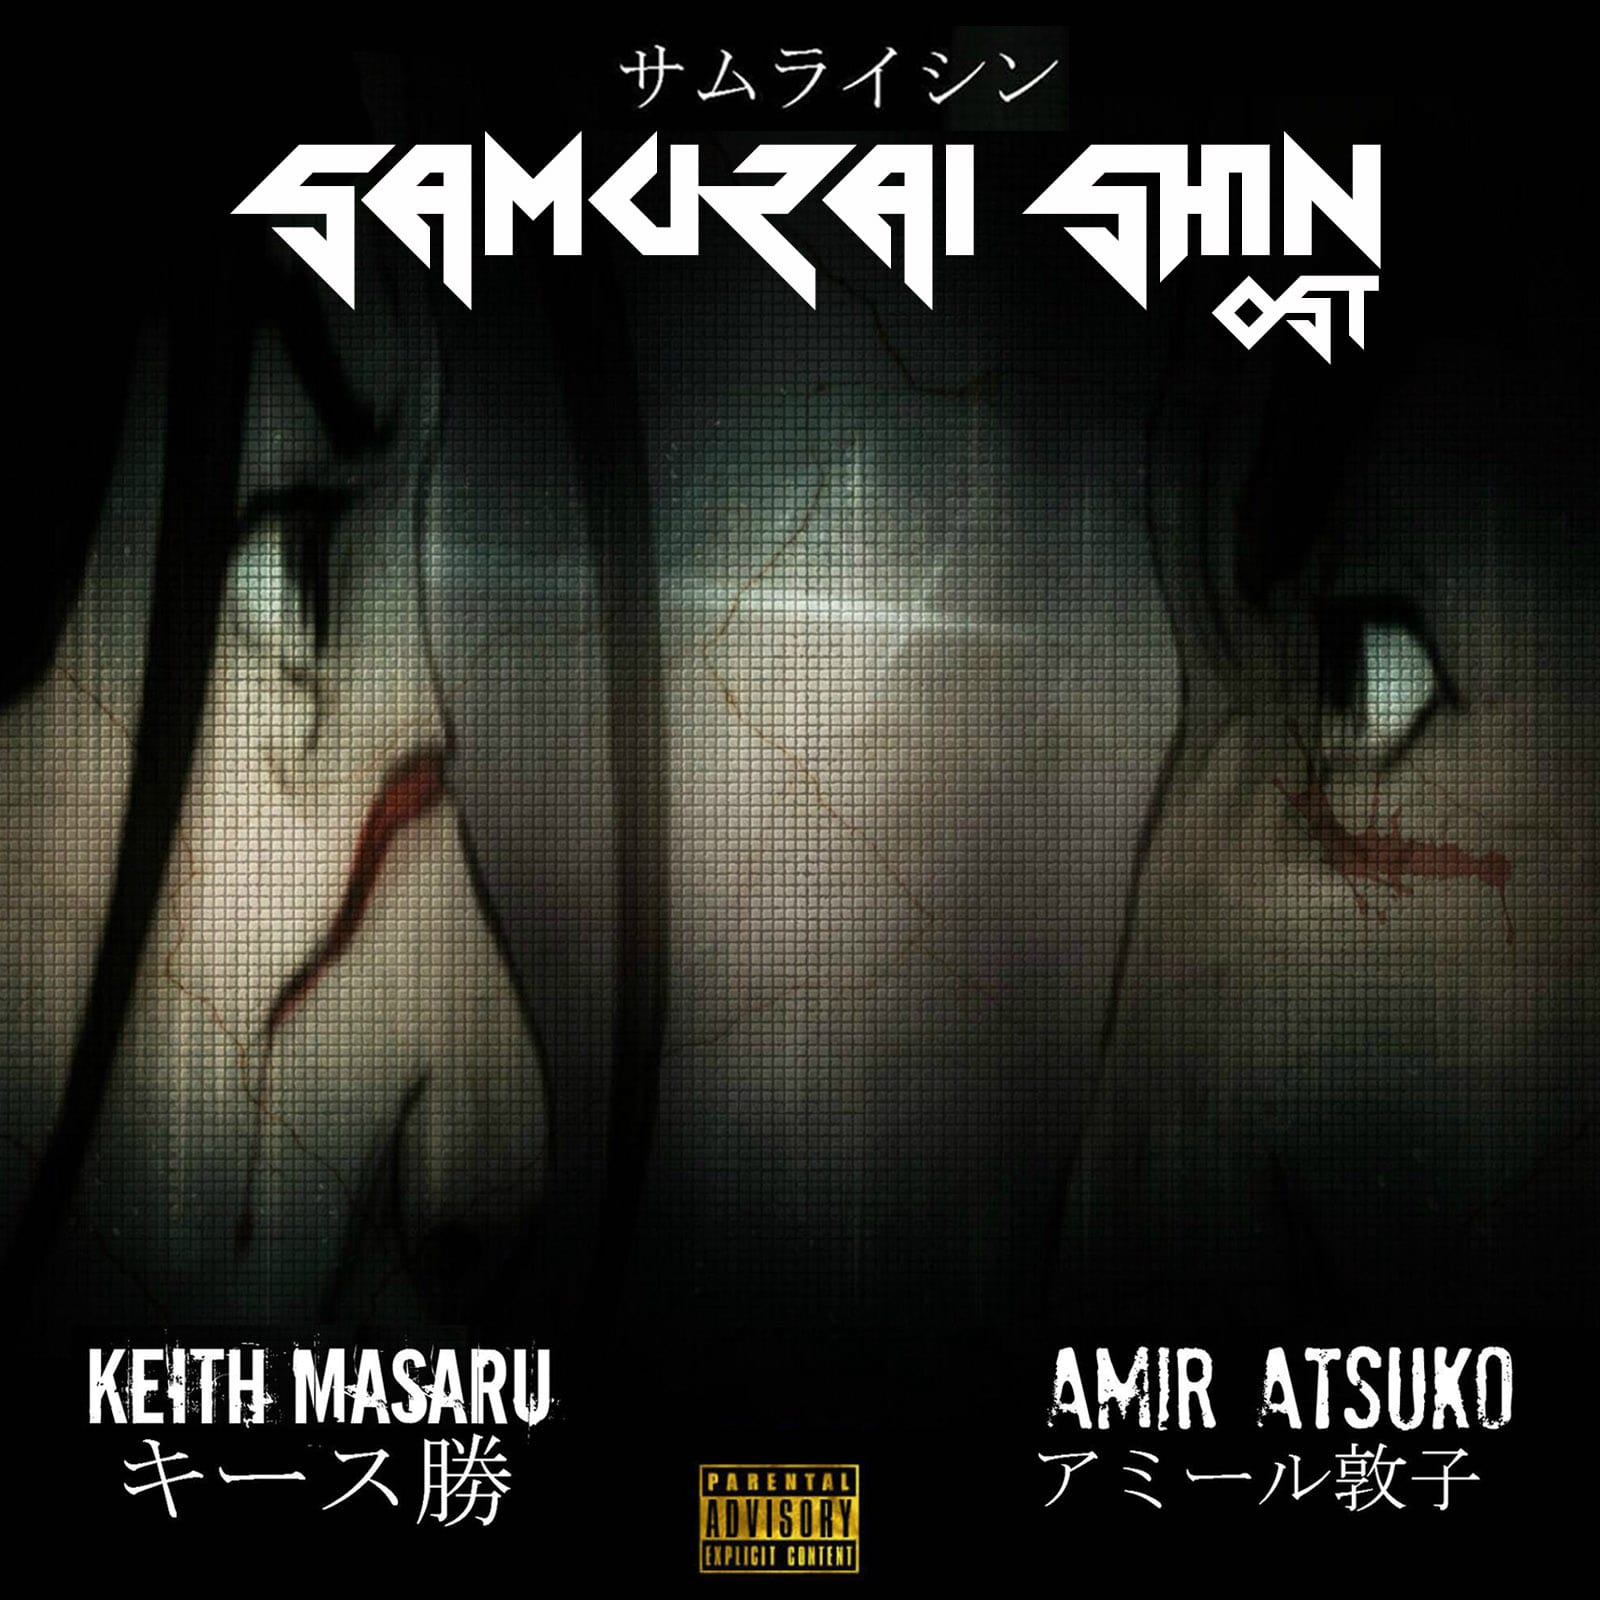 New Hip Hop Soundtrack - Samurai Shin OST (Snippets)